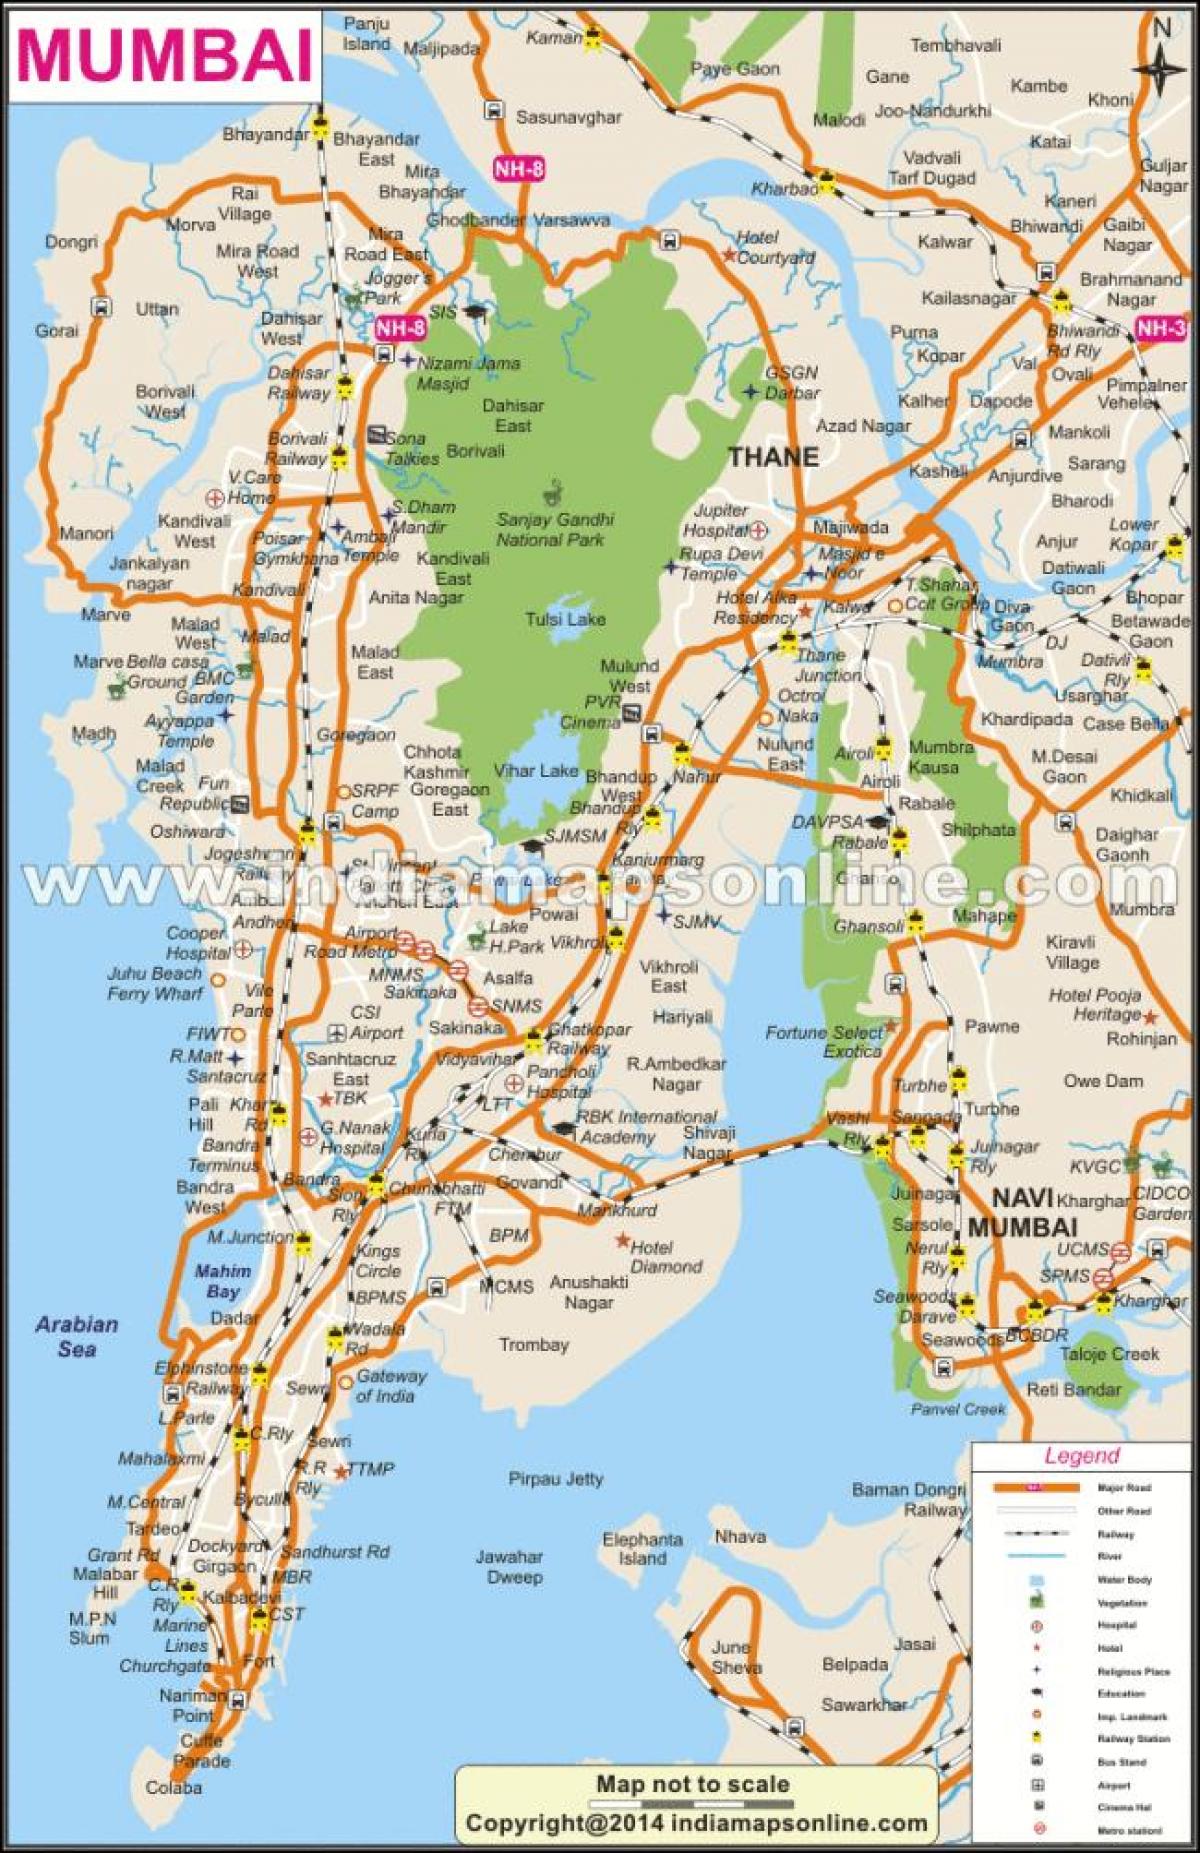 completa el mapa de Mumbai